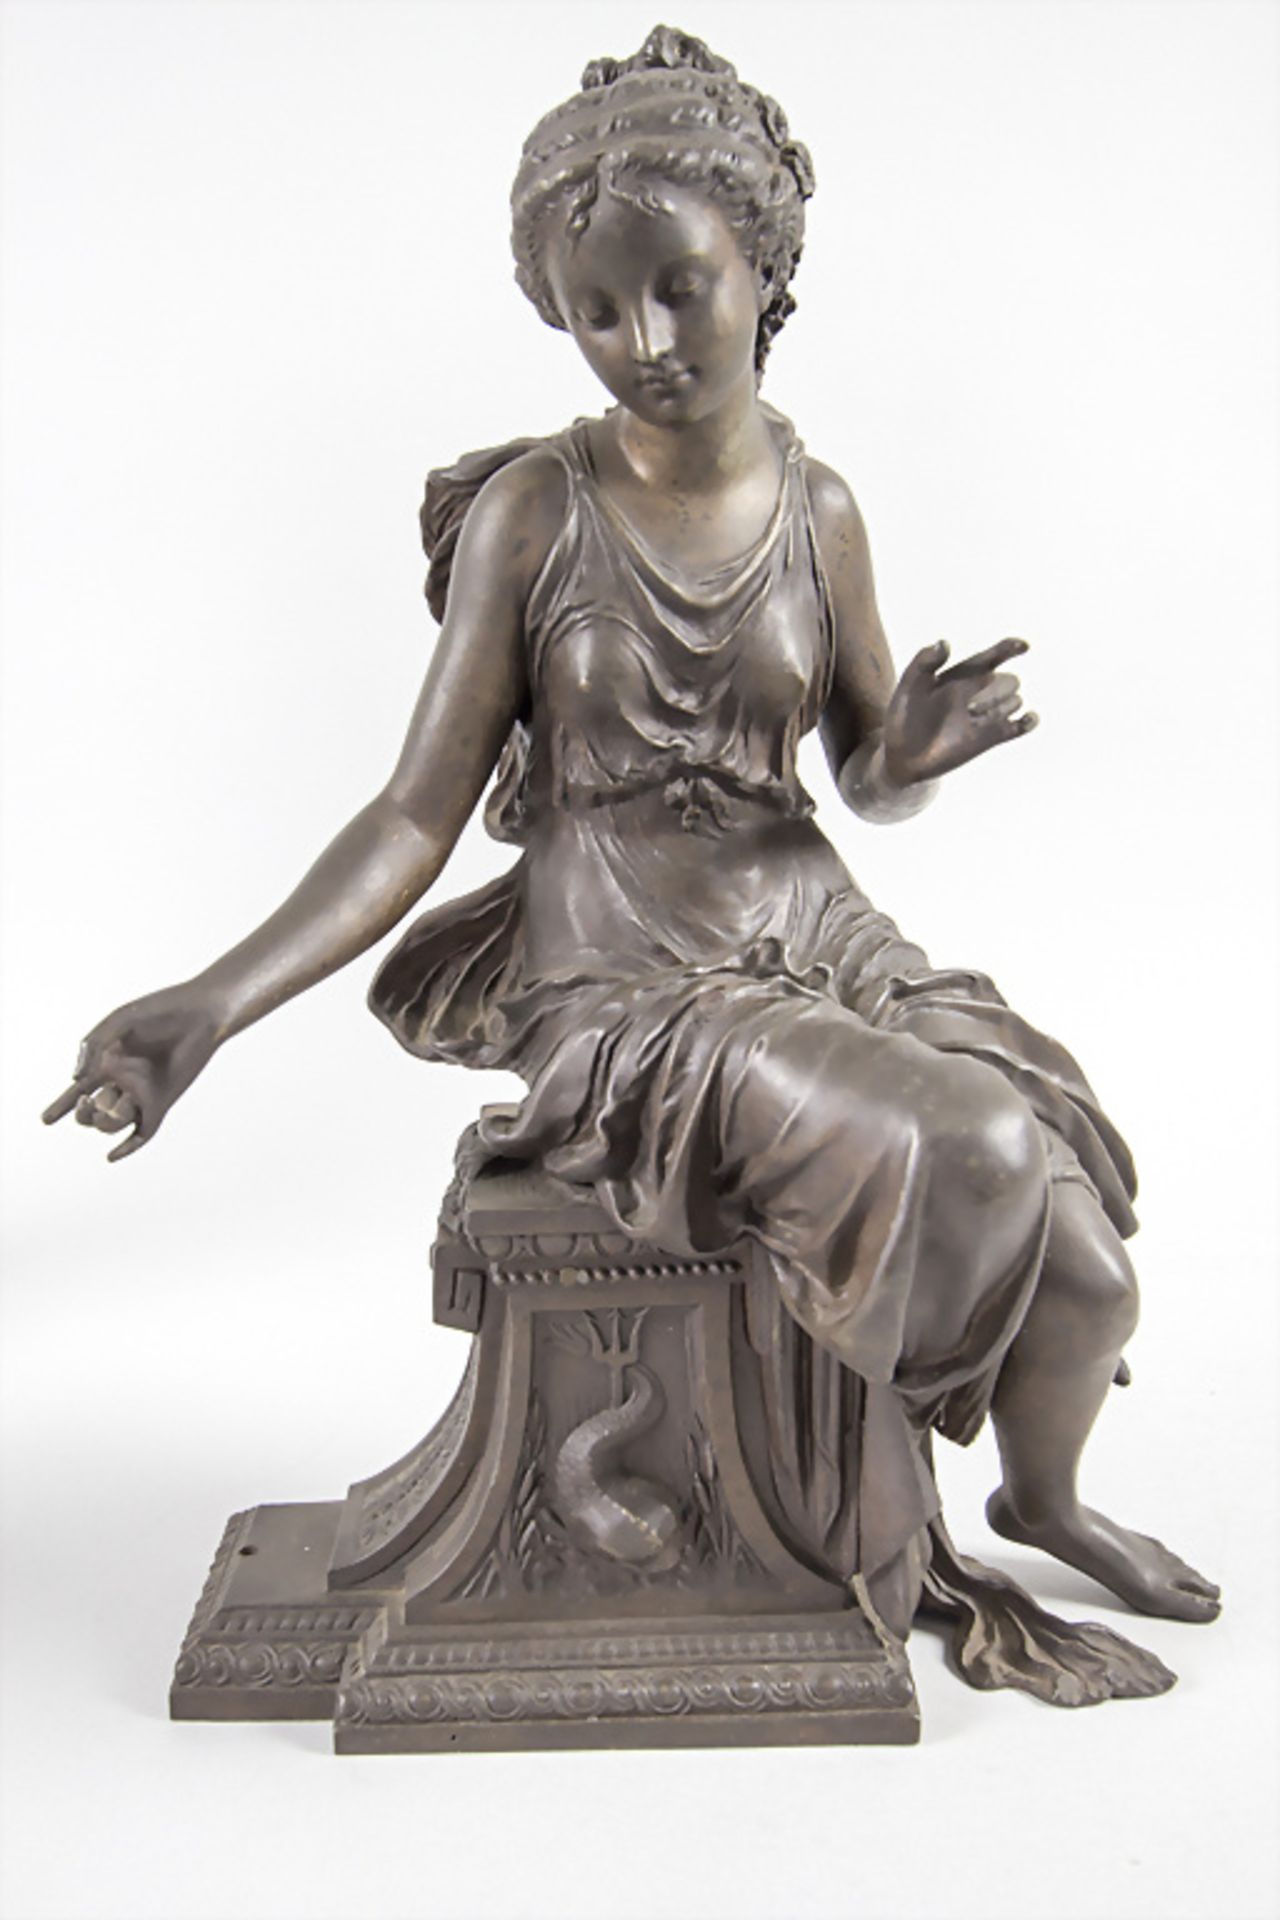 Plastik 'Sitzendes Mädchen auf Postament' / A figure of a sitting girl on a pedestal